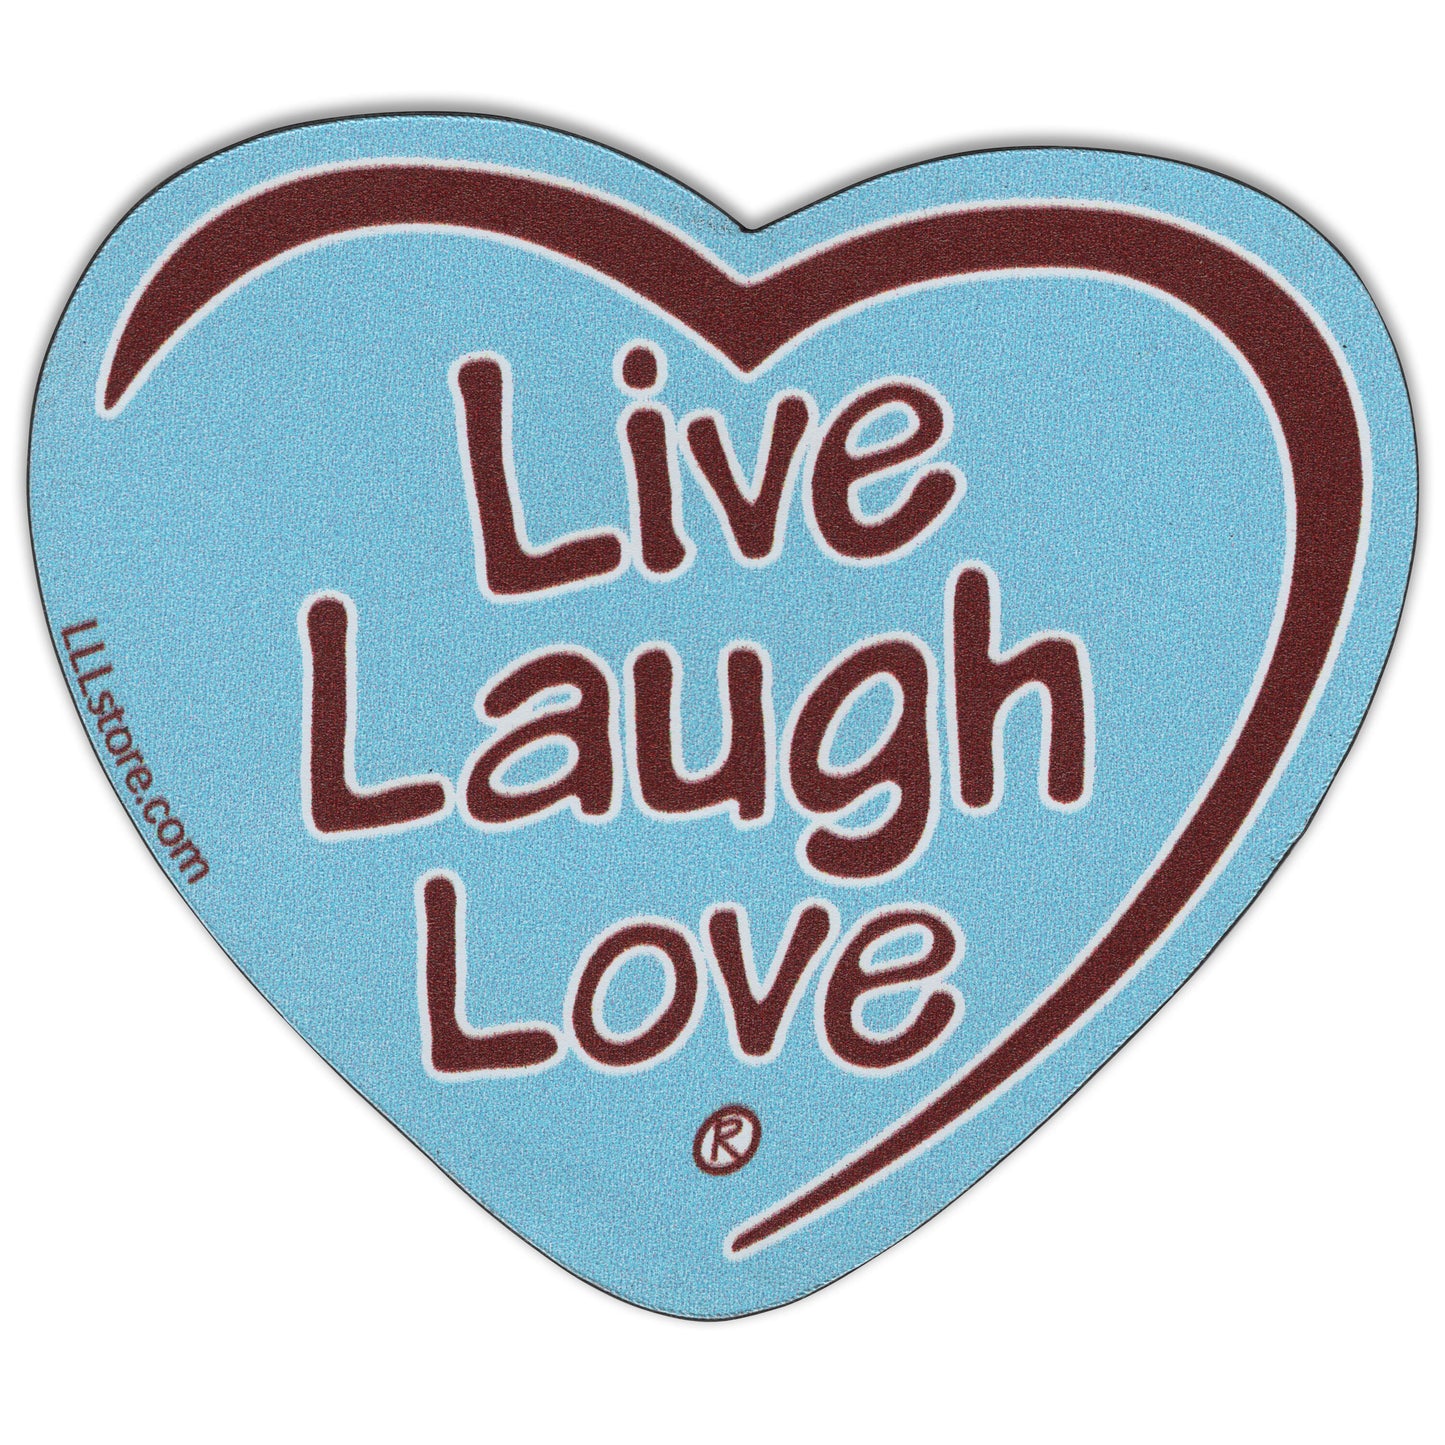 Live Laugh Love® Decorative Heart Shape Message Magnet - Red on Blue